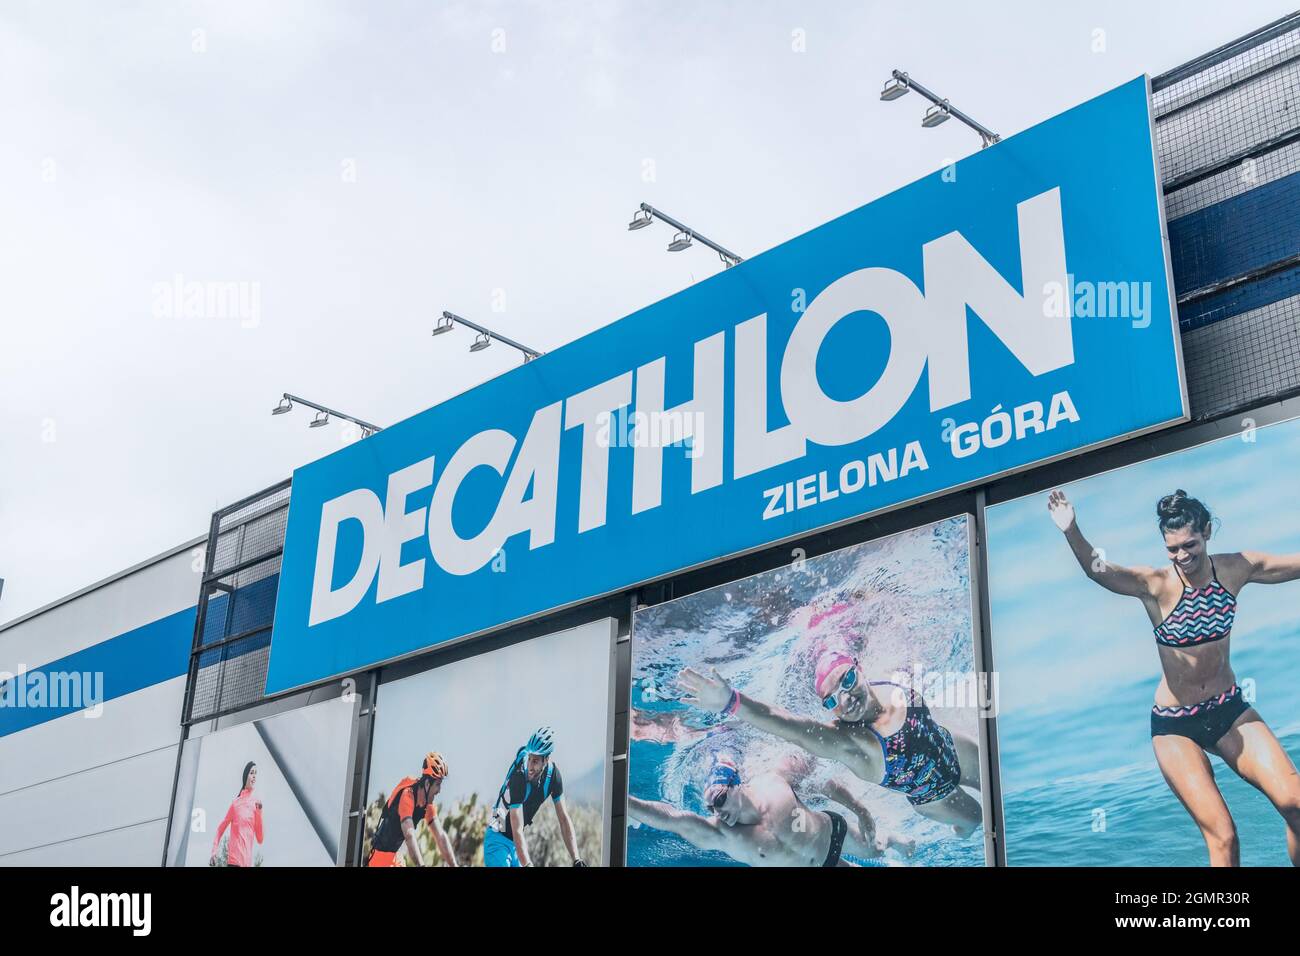 Zielona Gora, Poland - June 1, 2021: Decathlon store sign hanging on a building in Zielona Gora. Stock Photo